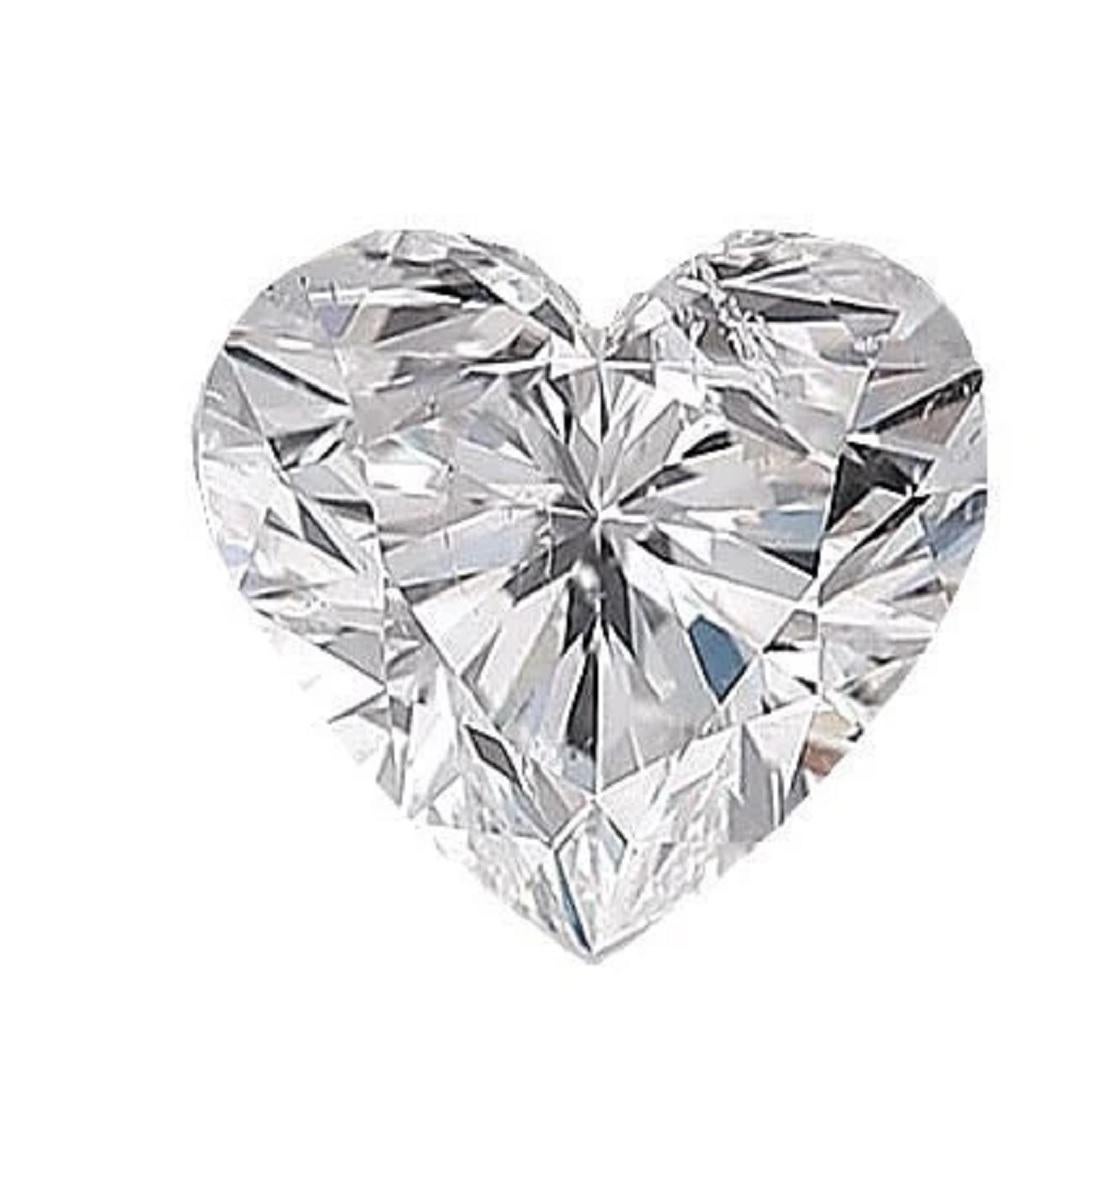 Amazing GIA certified 2.20 carat heart shape diamond pendant perfect present!